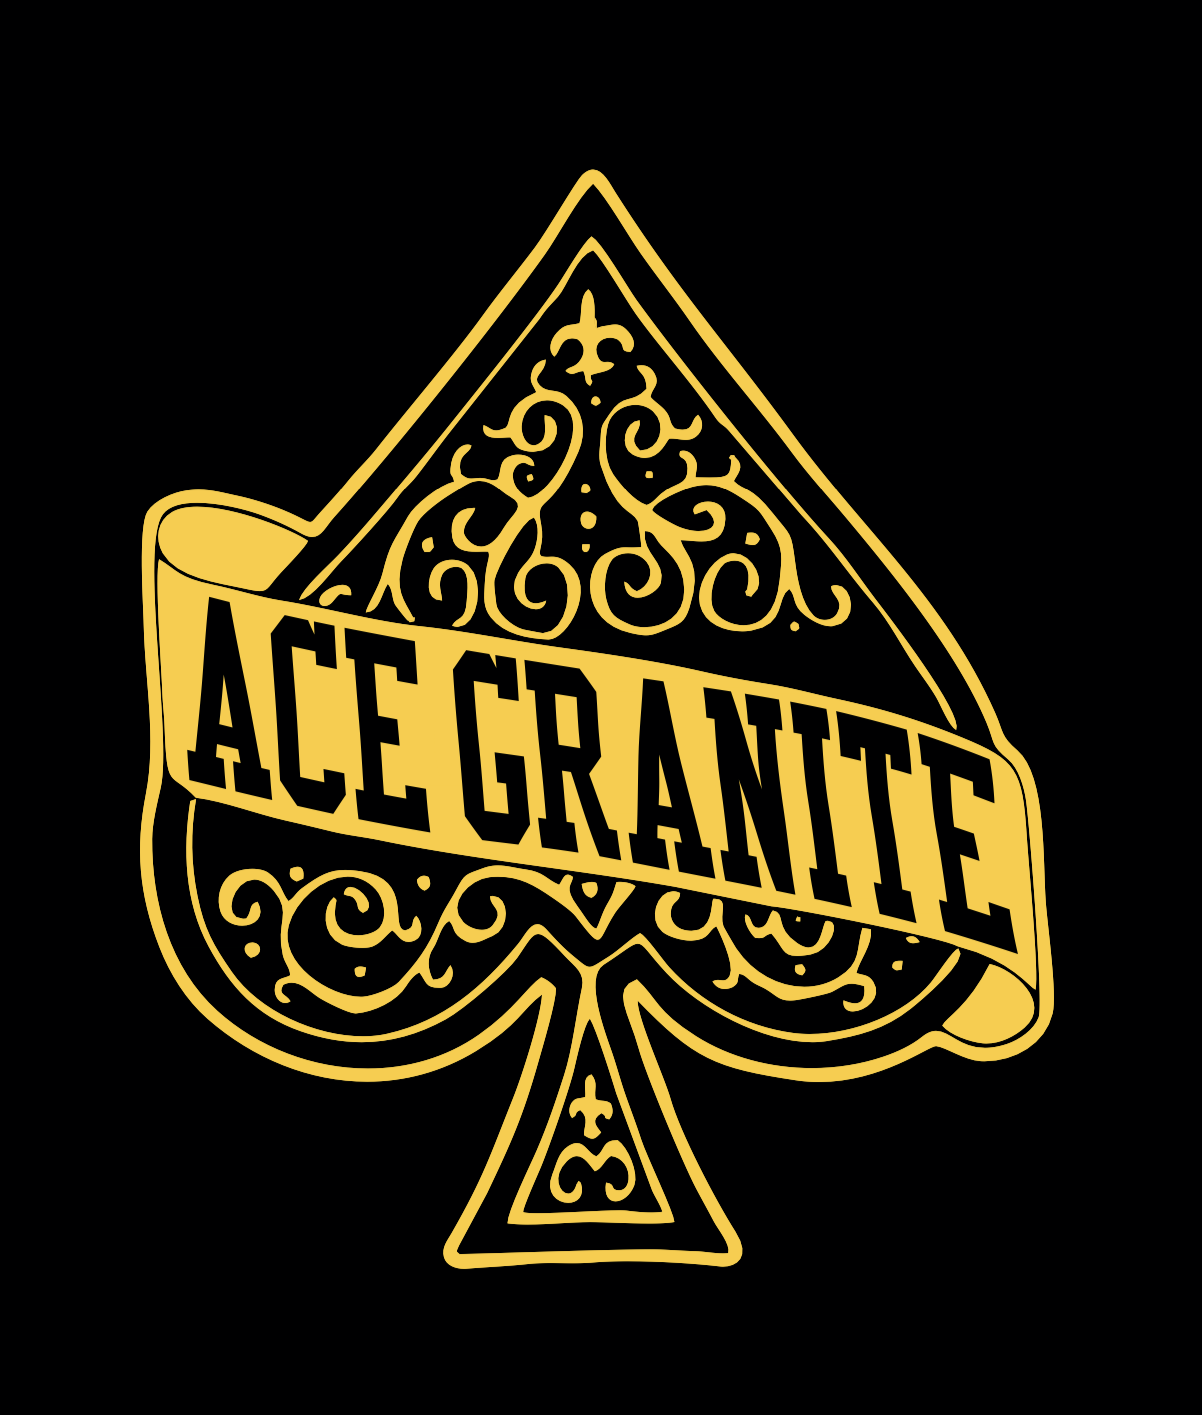 ACE Granite